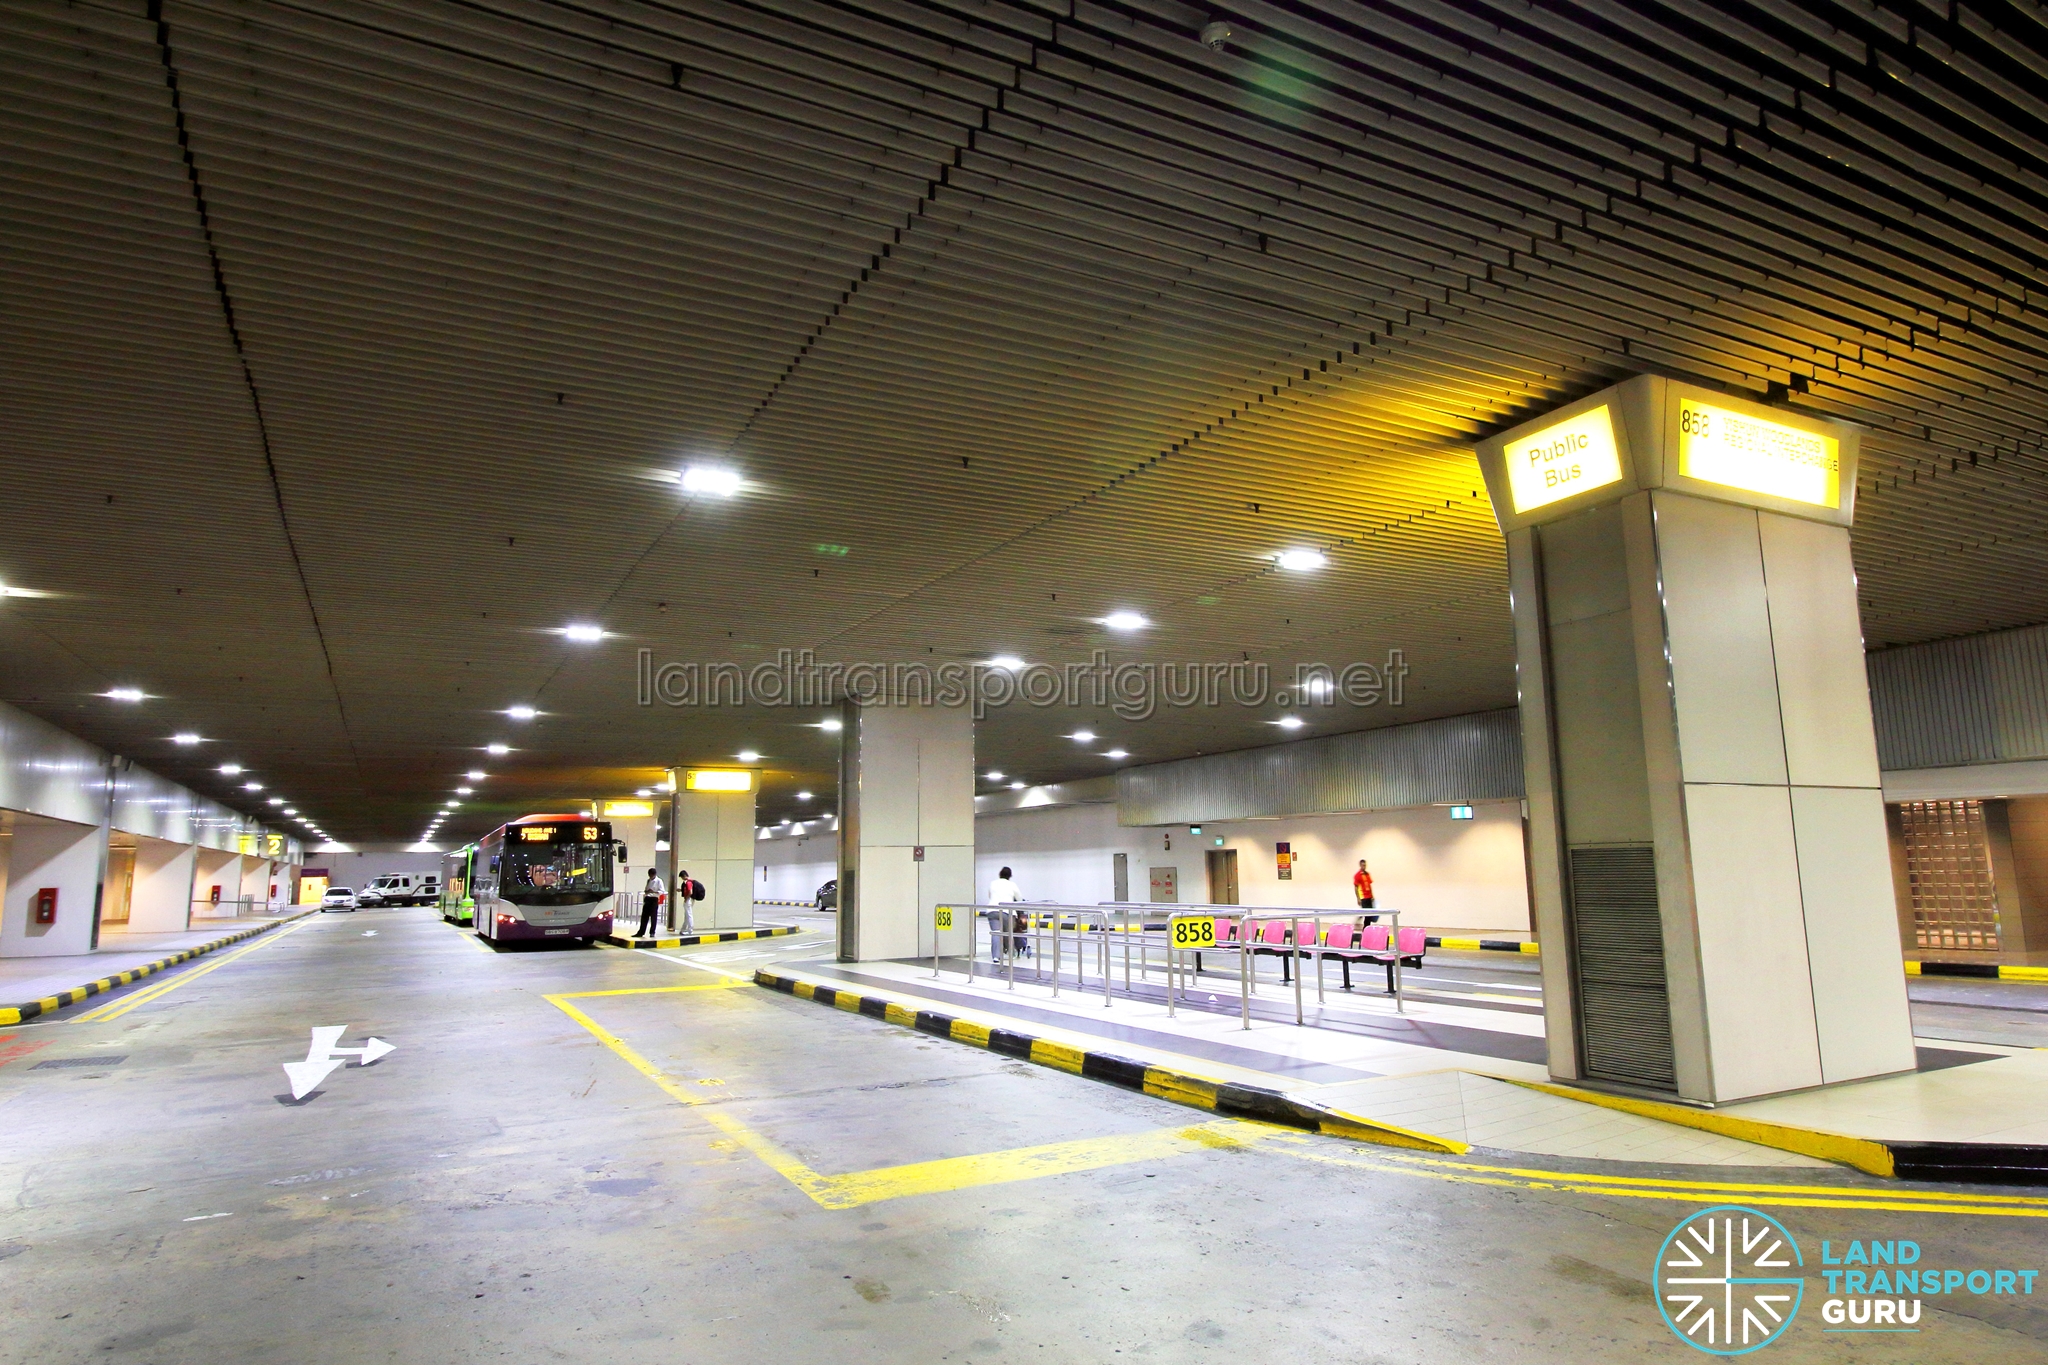 Changi Airport Terminal 2 Basement – Near Service 858 berth